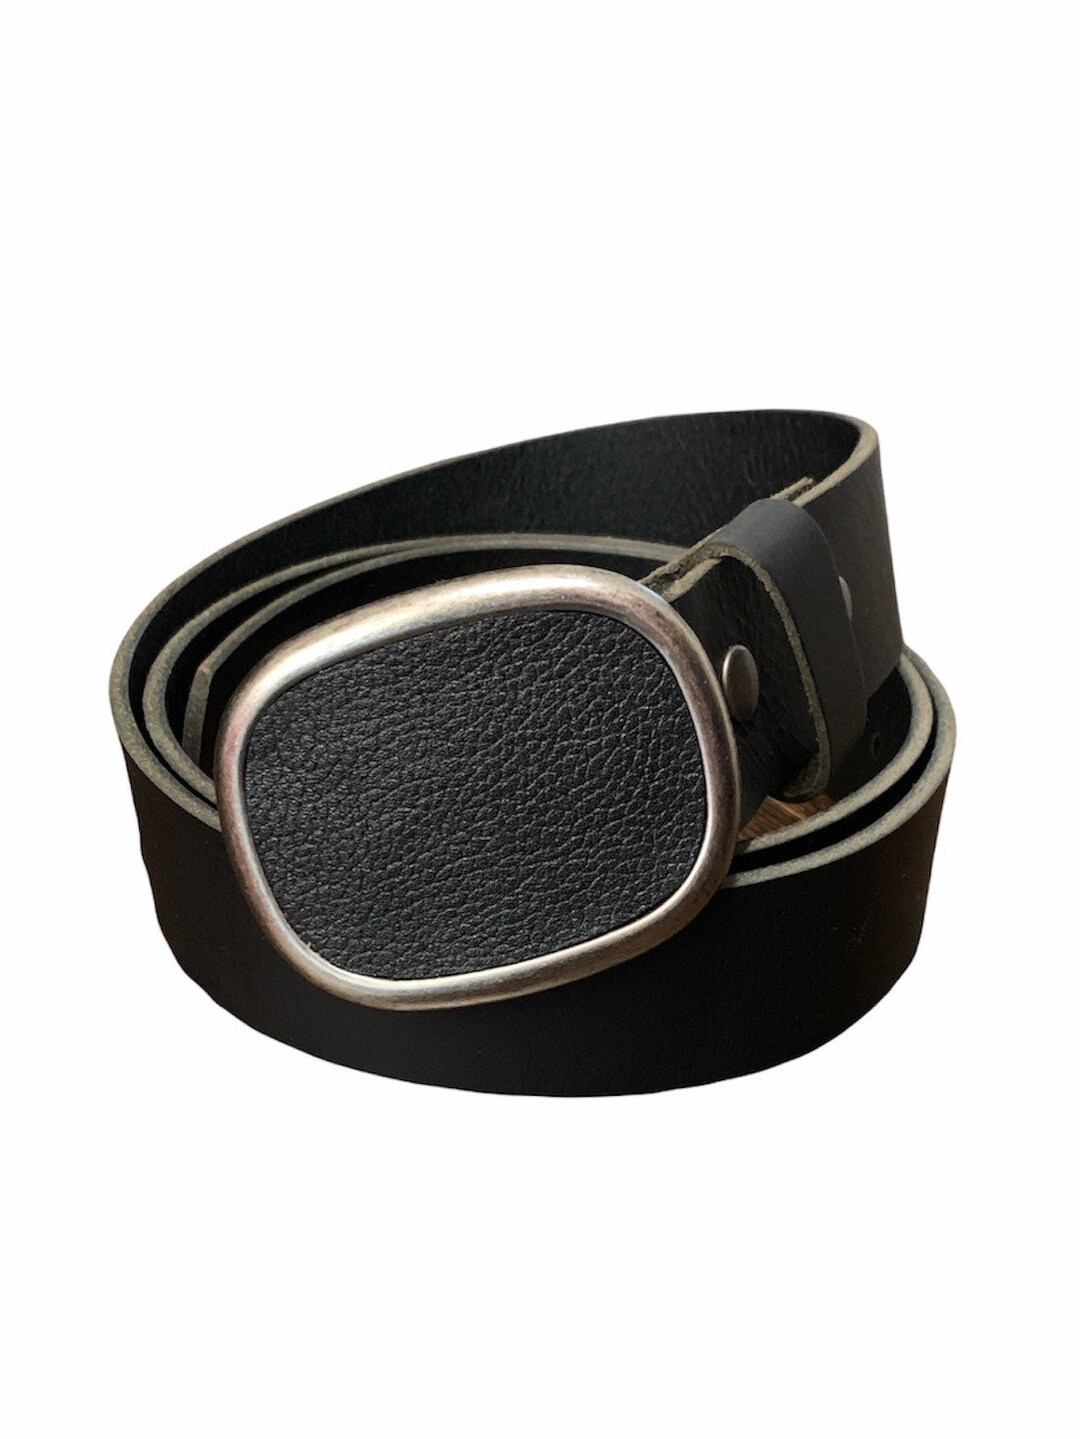 Pebbled Leather Belt Buckle in Black Oval Antique Silver Belt - Etsy